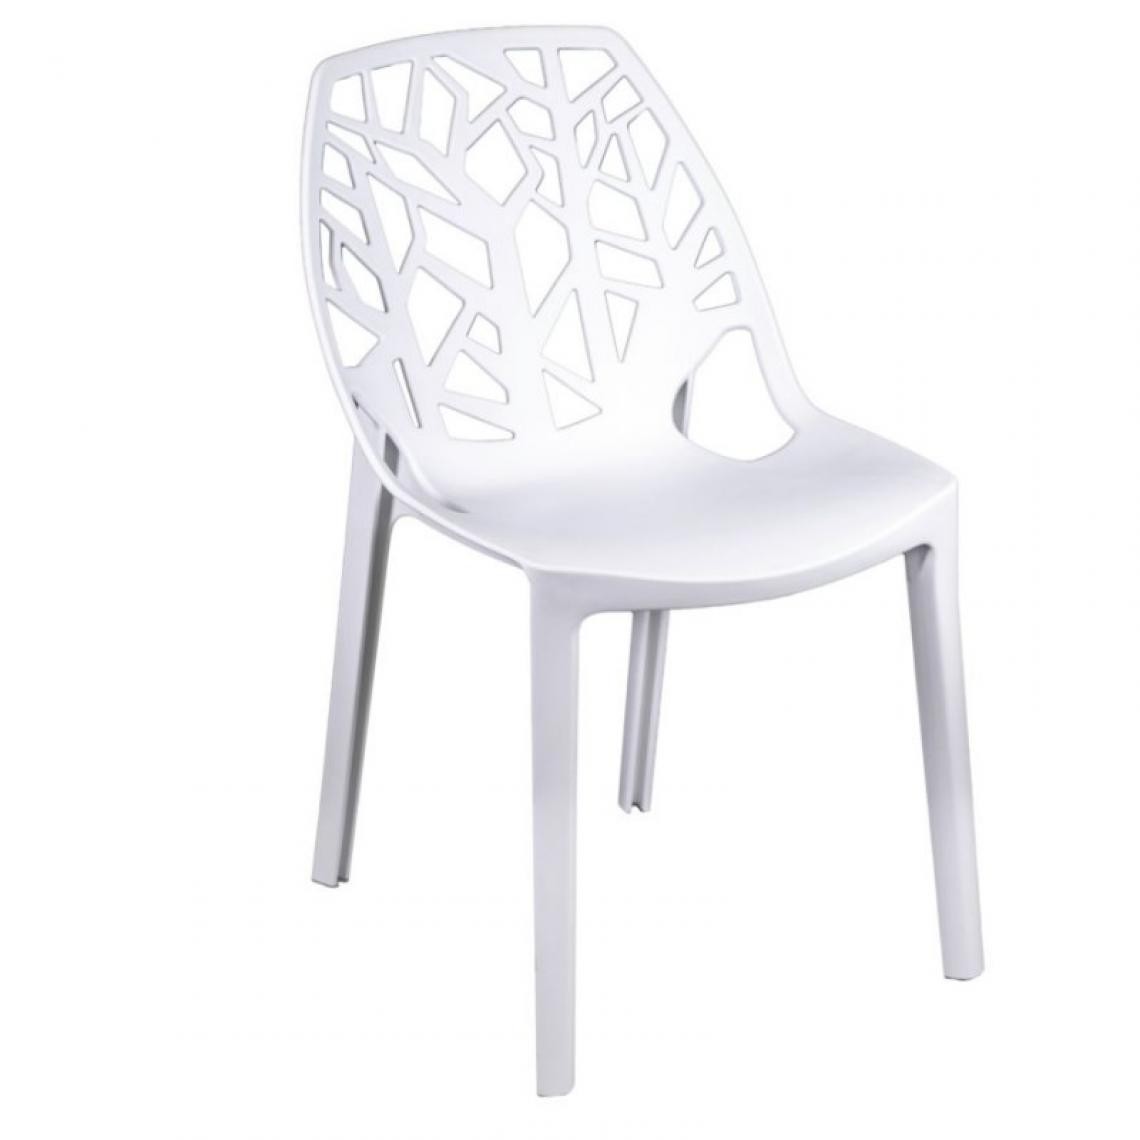 Webmarketpoint - Chaise empilable polypropylène blanche 55x46x46,5 / 81,5h cm - Chaises